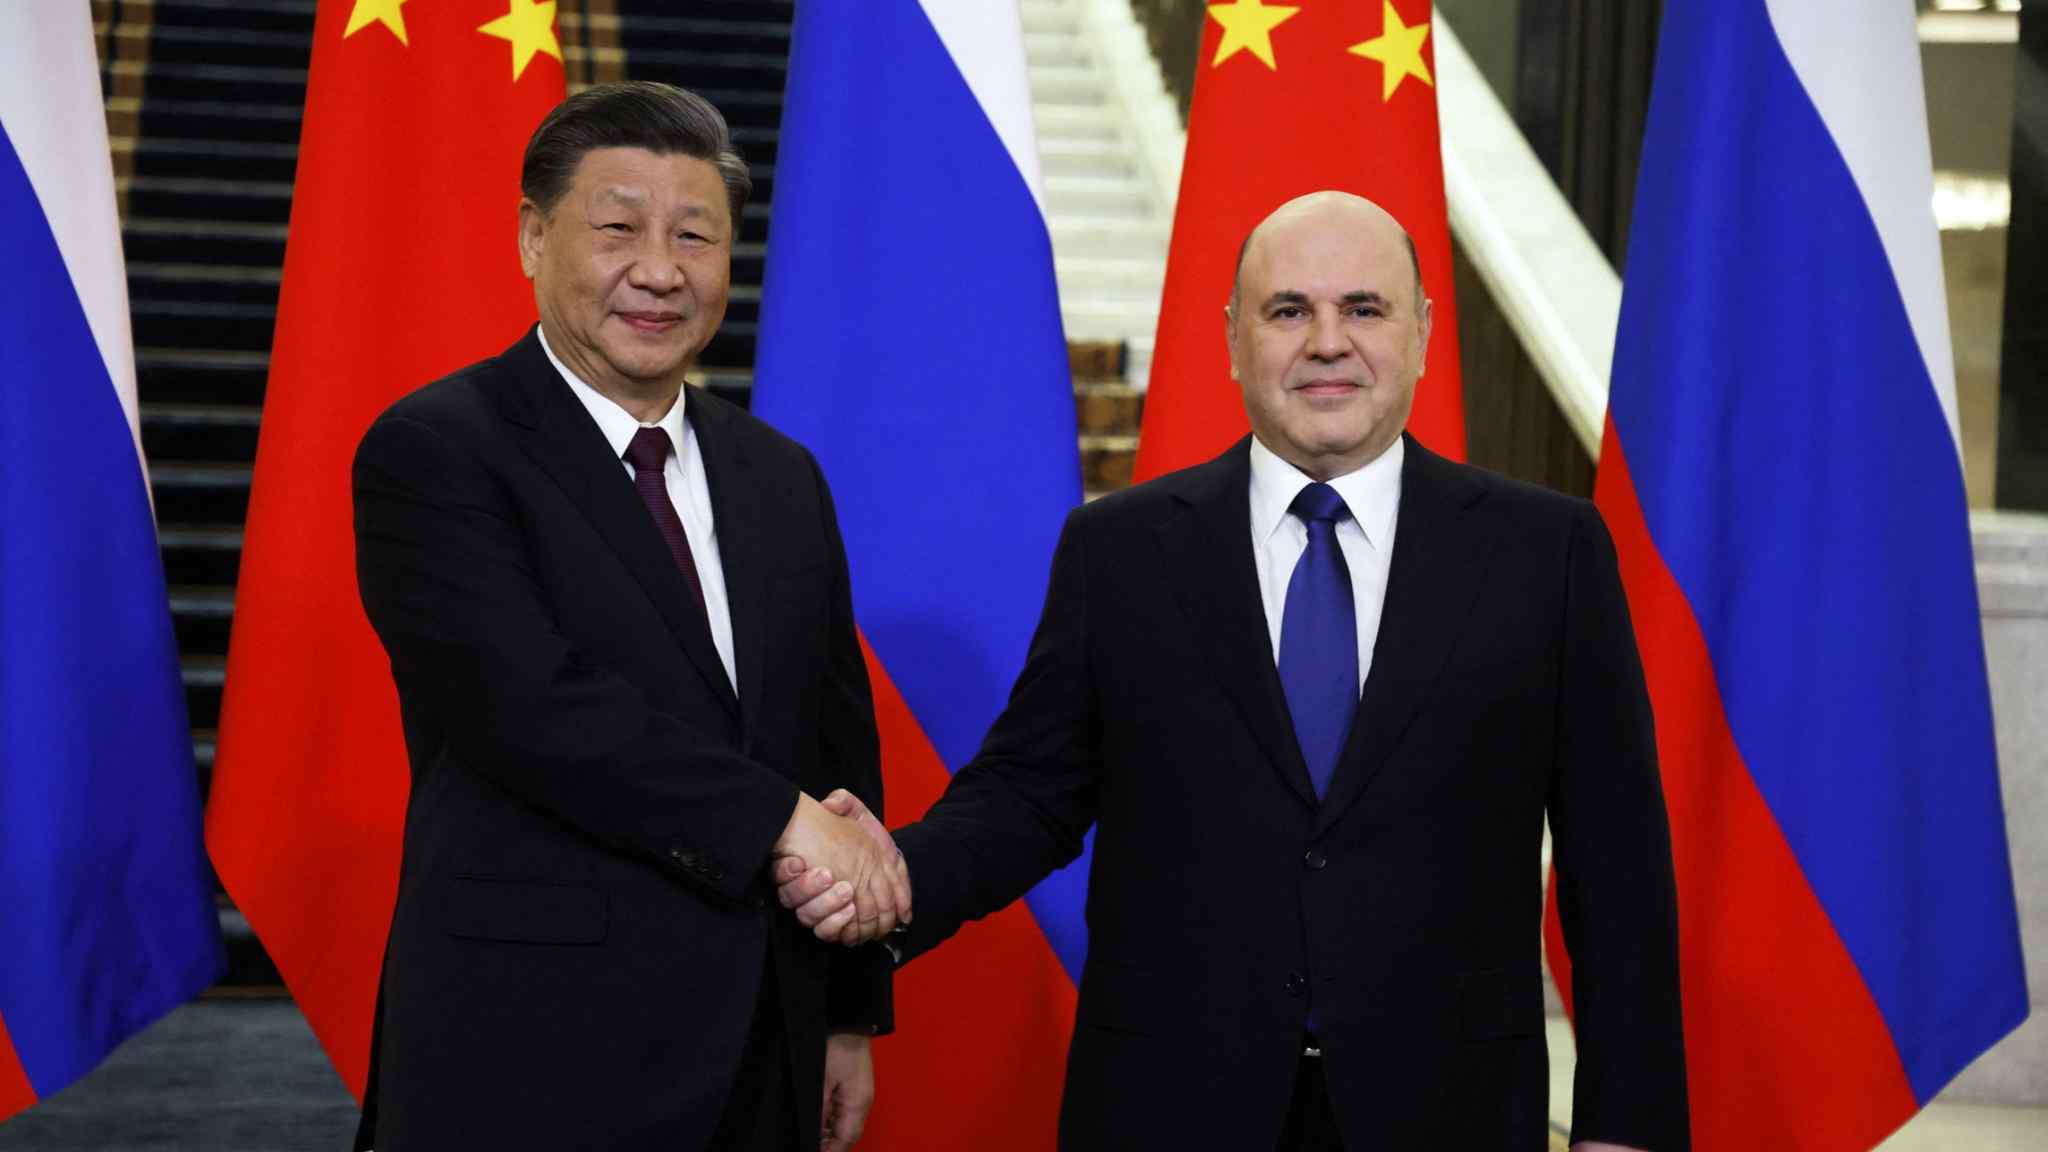 Xi invites Putin on state visit to China